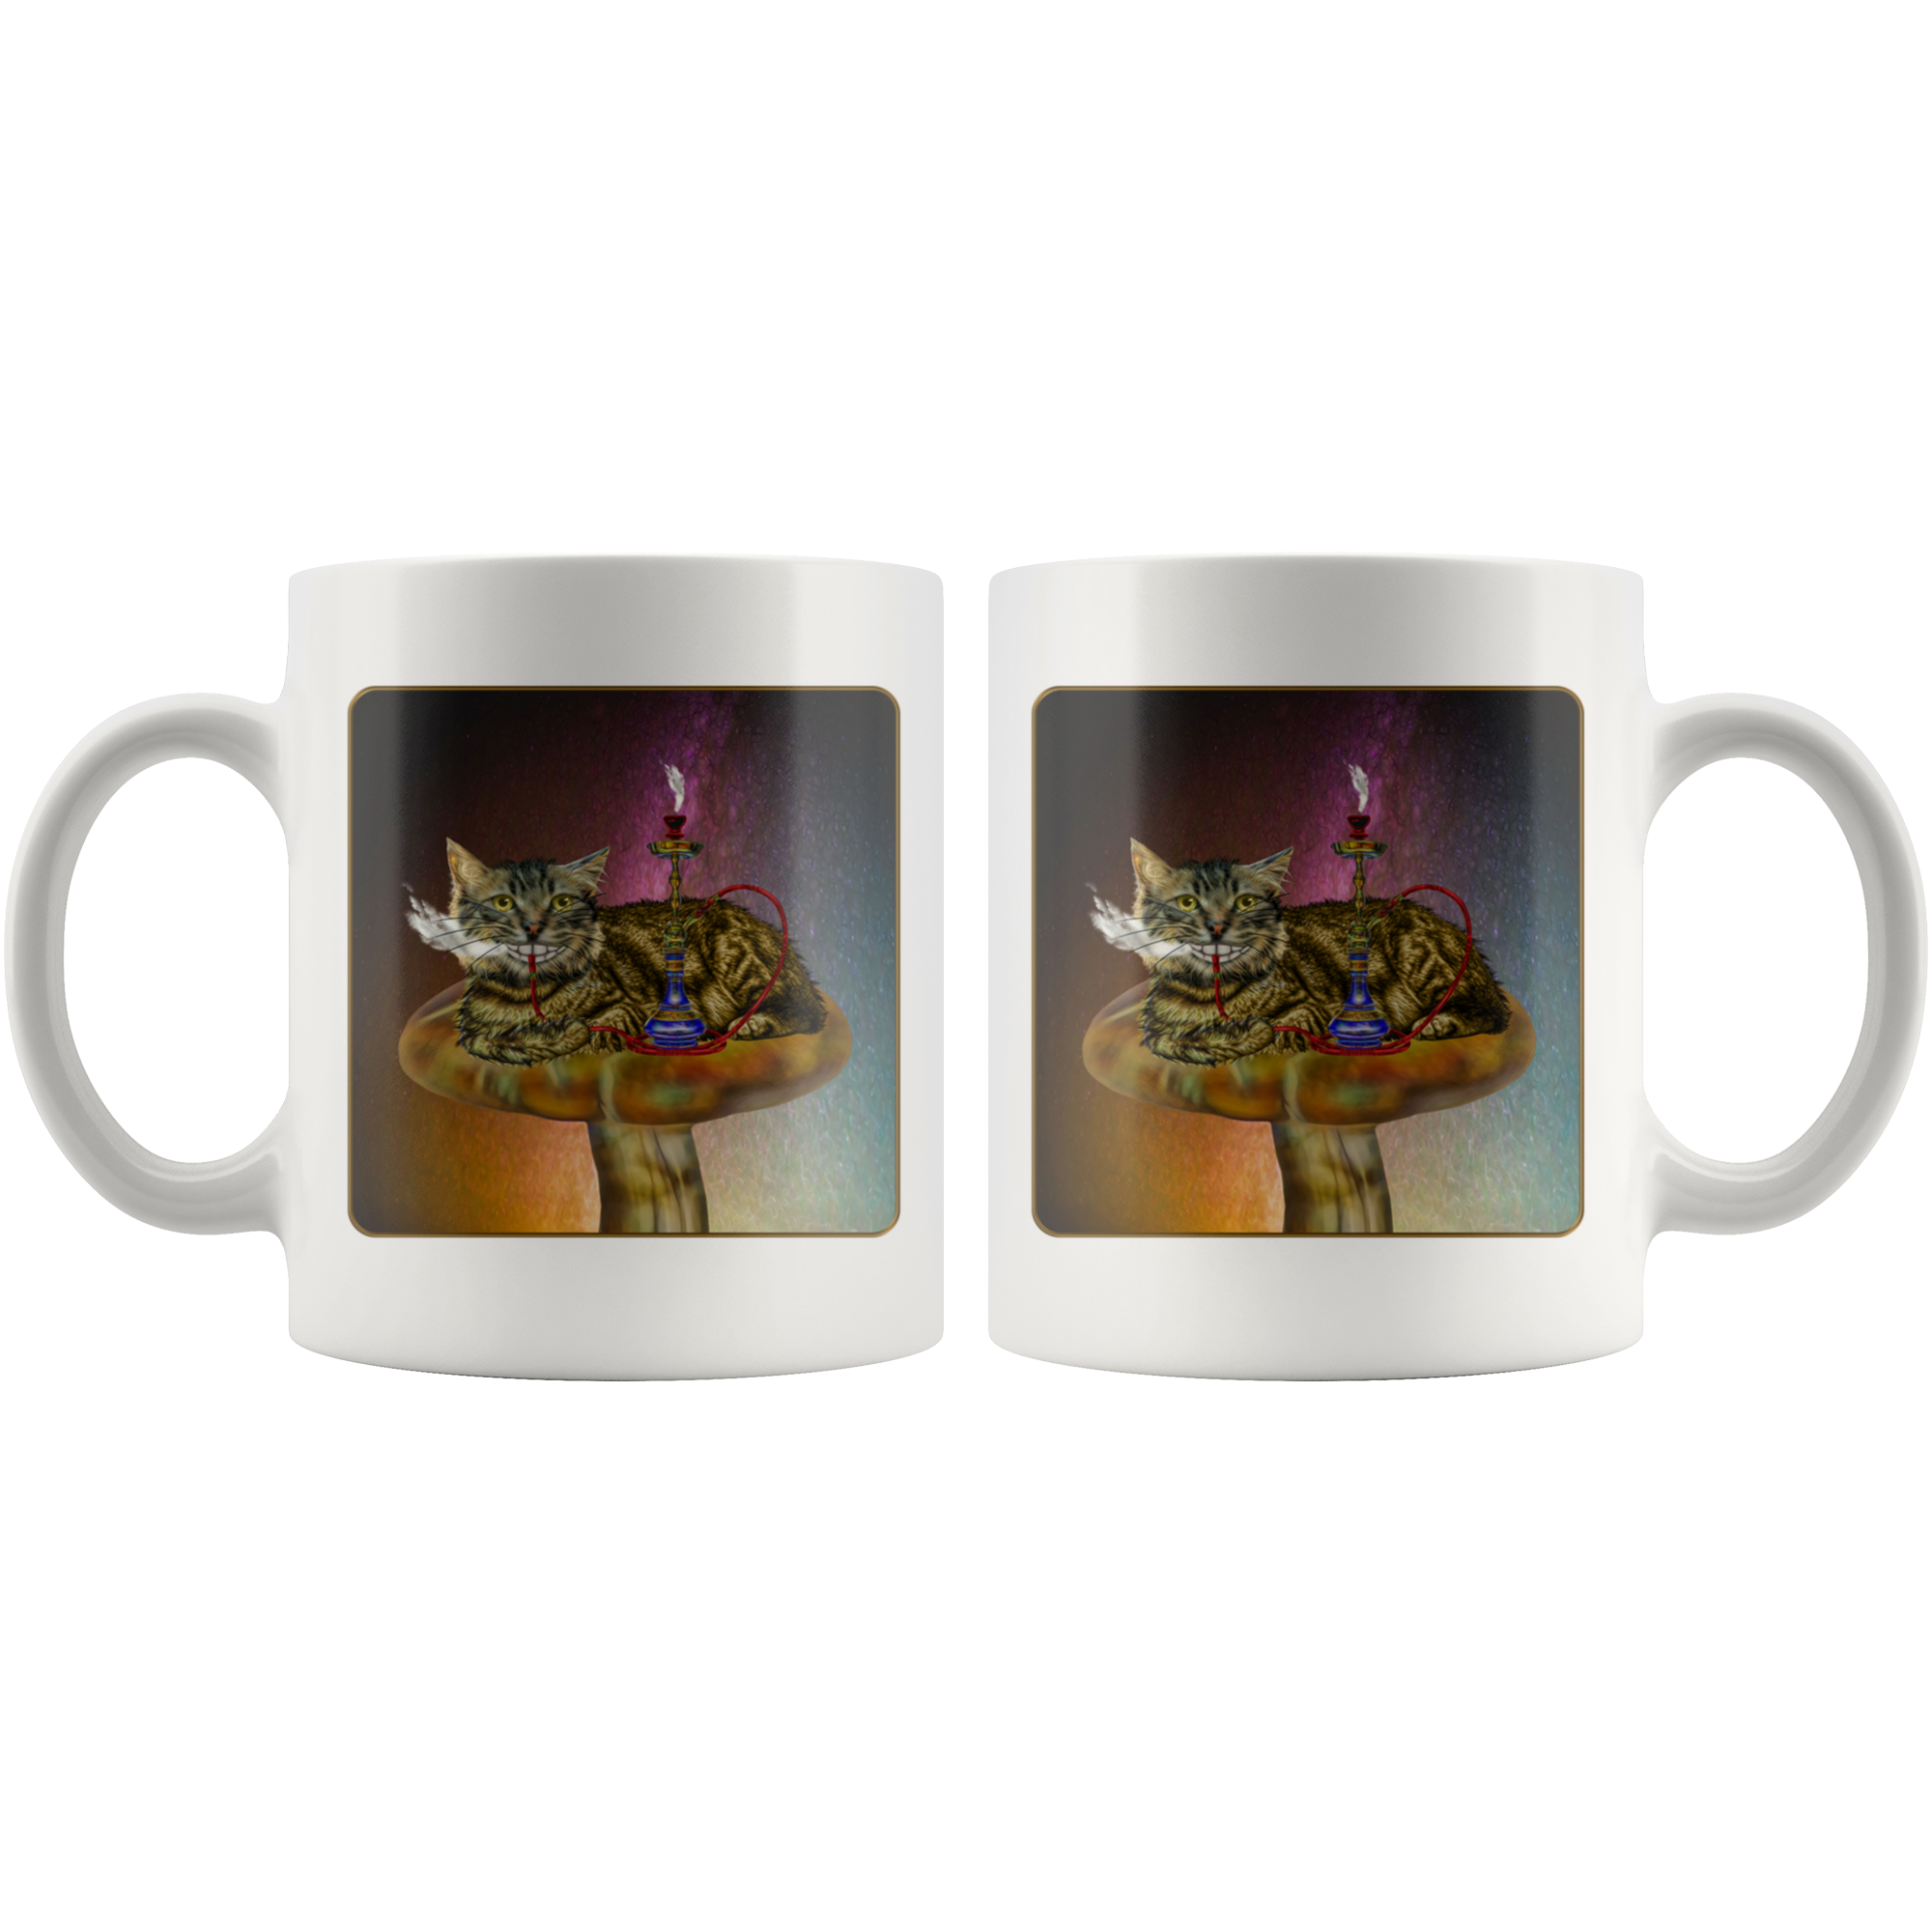 Magic Mushroom - 11 oz mug